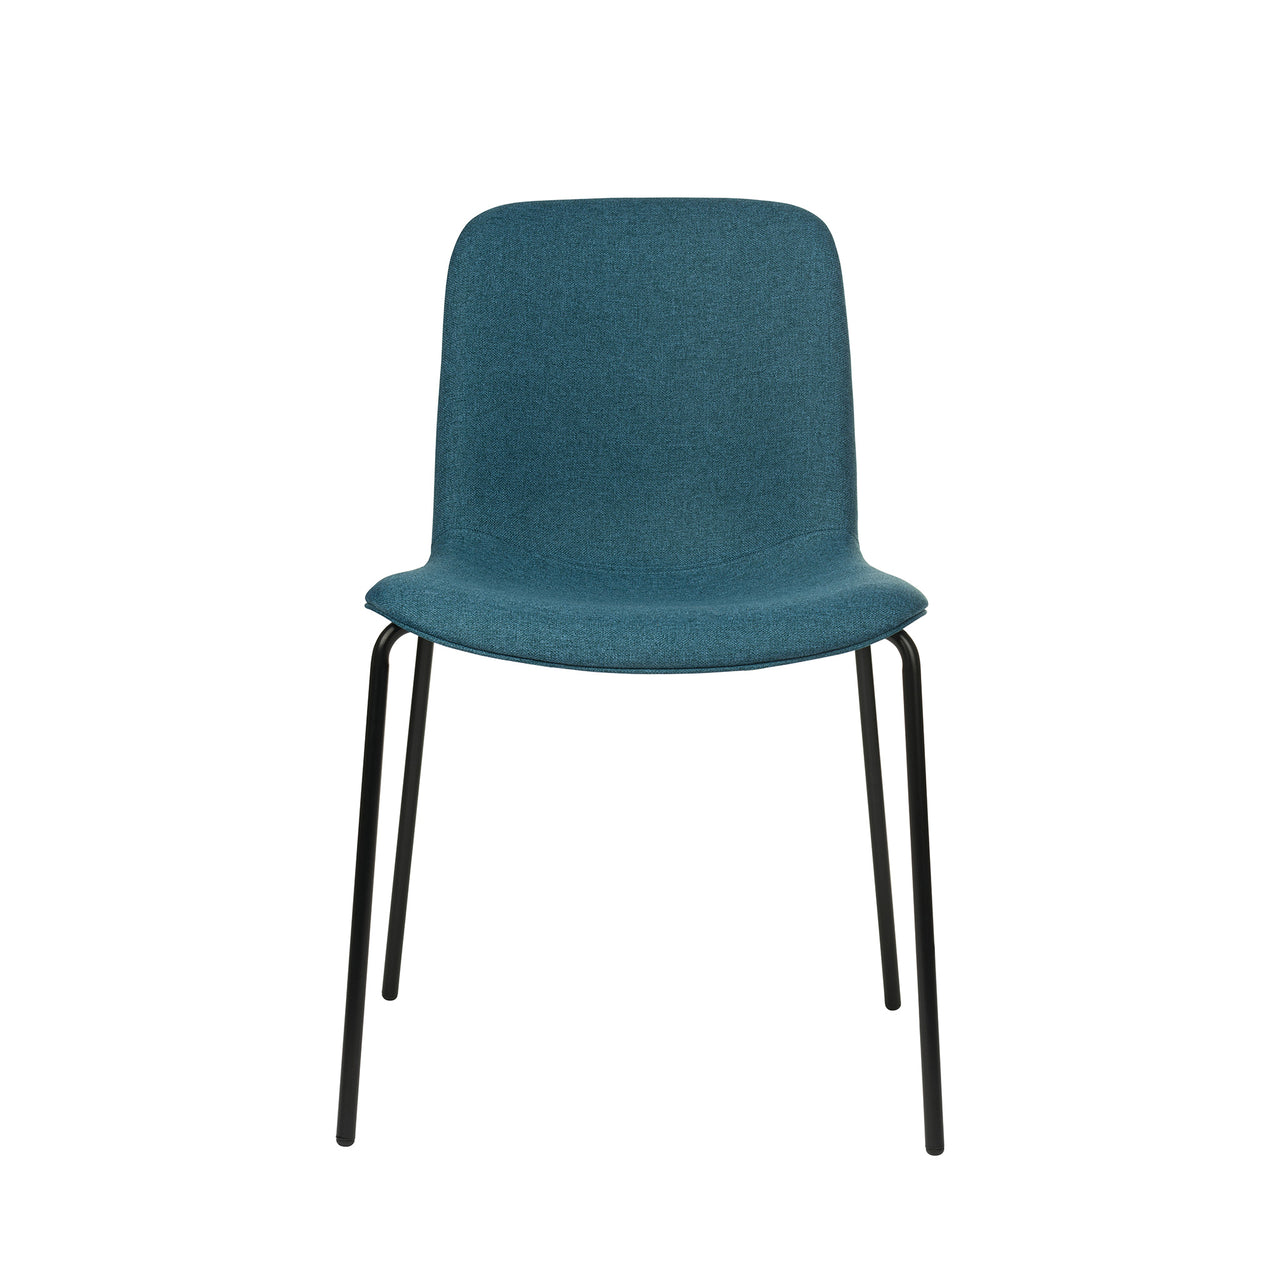 Murray Side Chairs, 4-Leg Base, Set of 2 (Slate Blue Fabric)